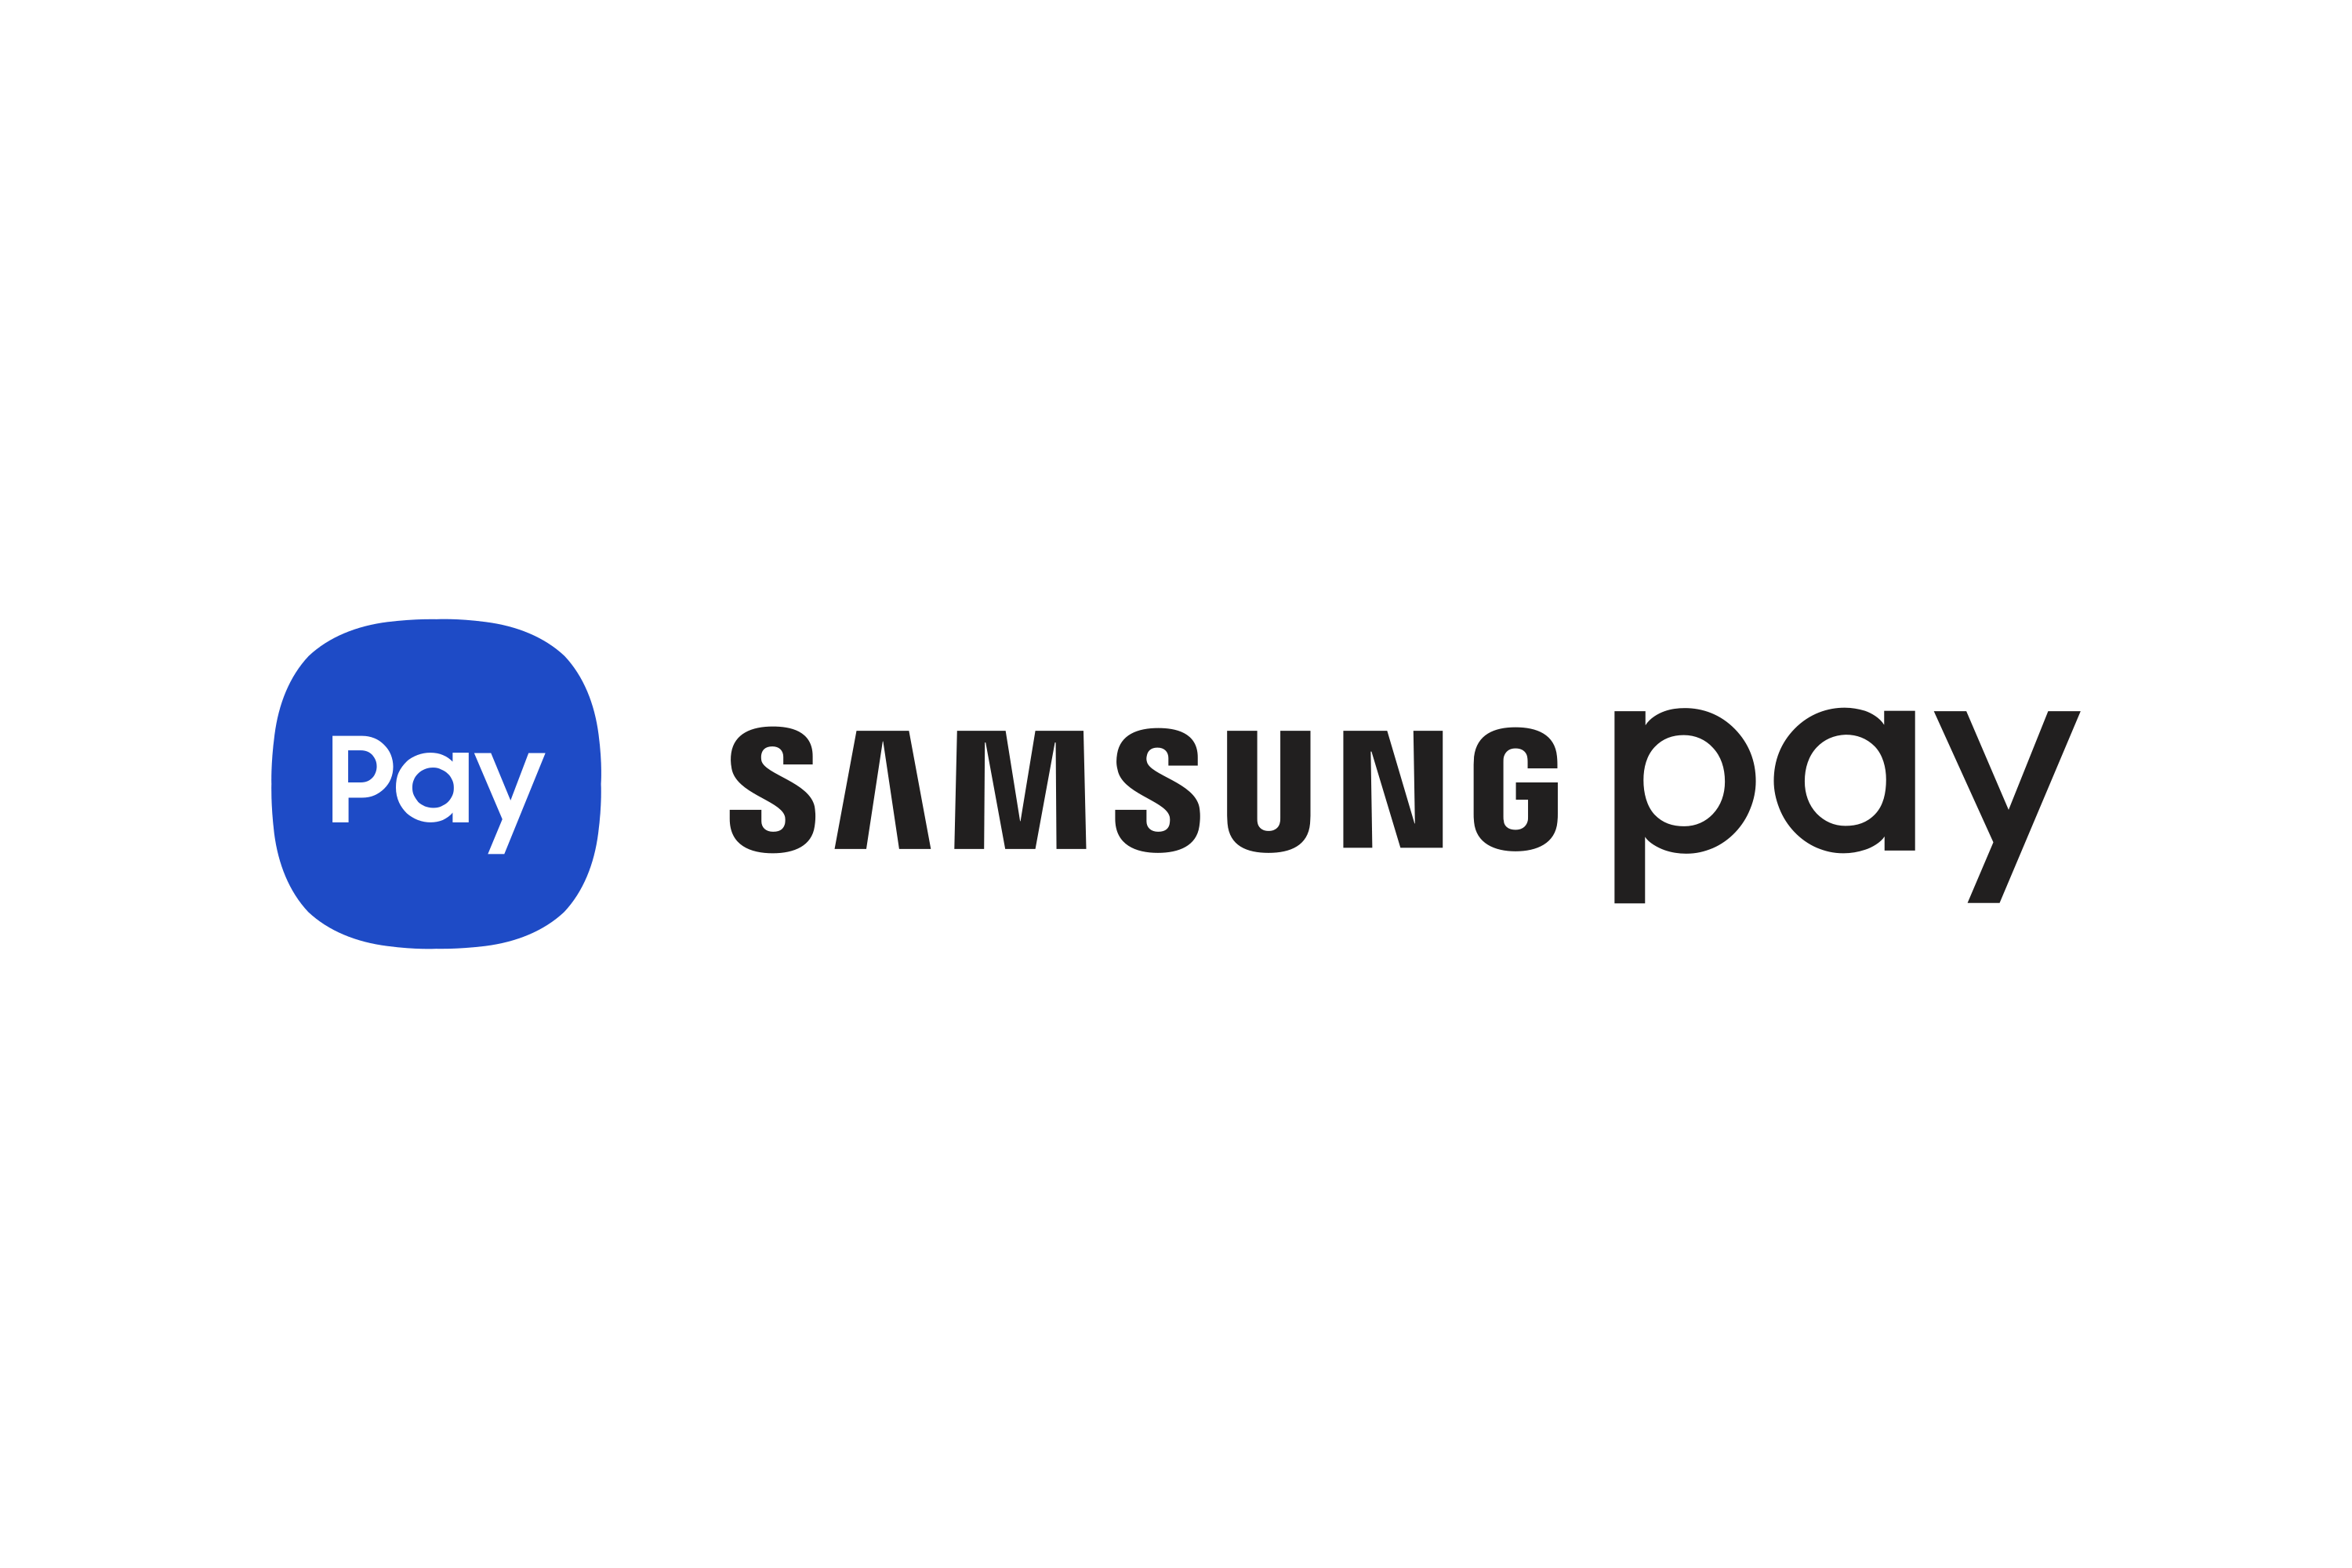 Samsung pay icon